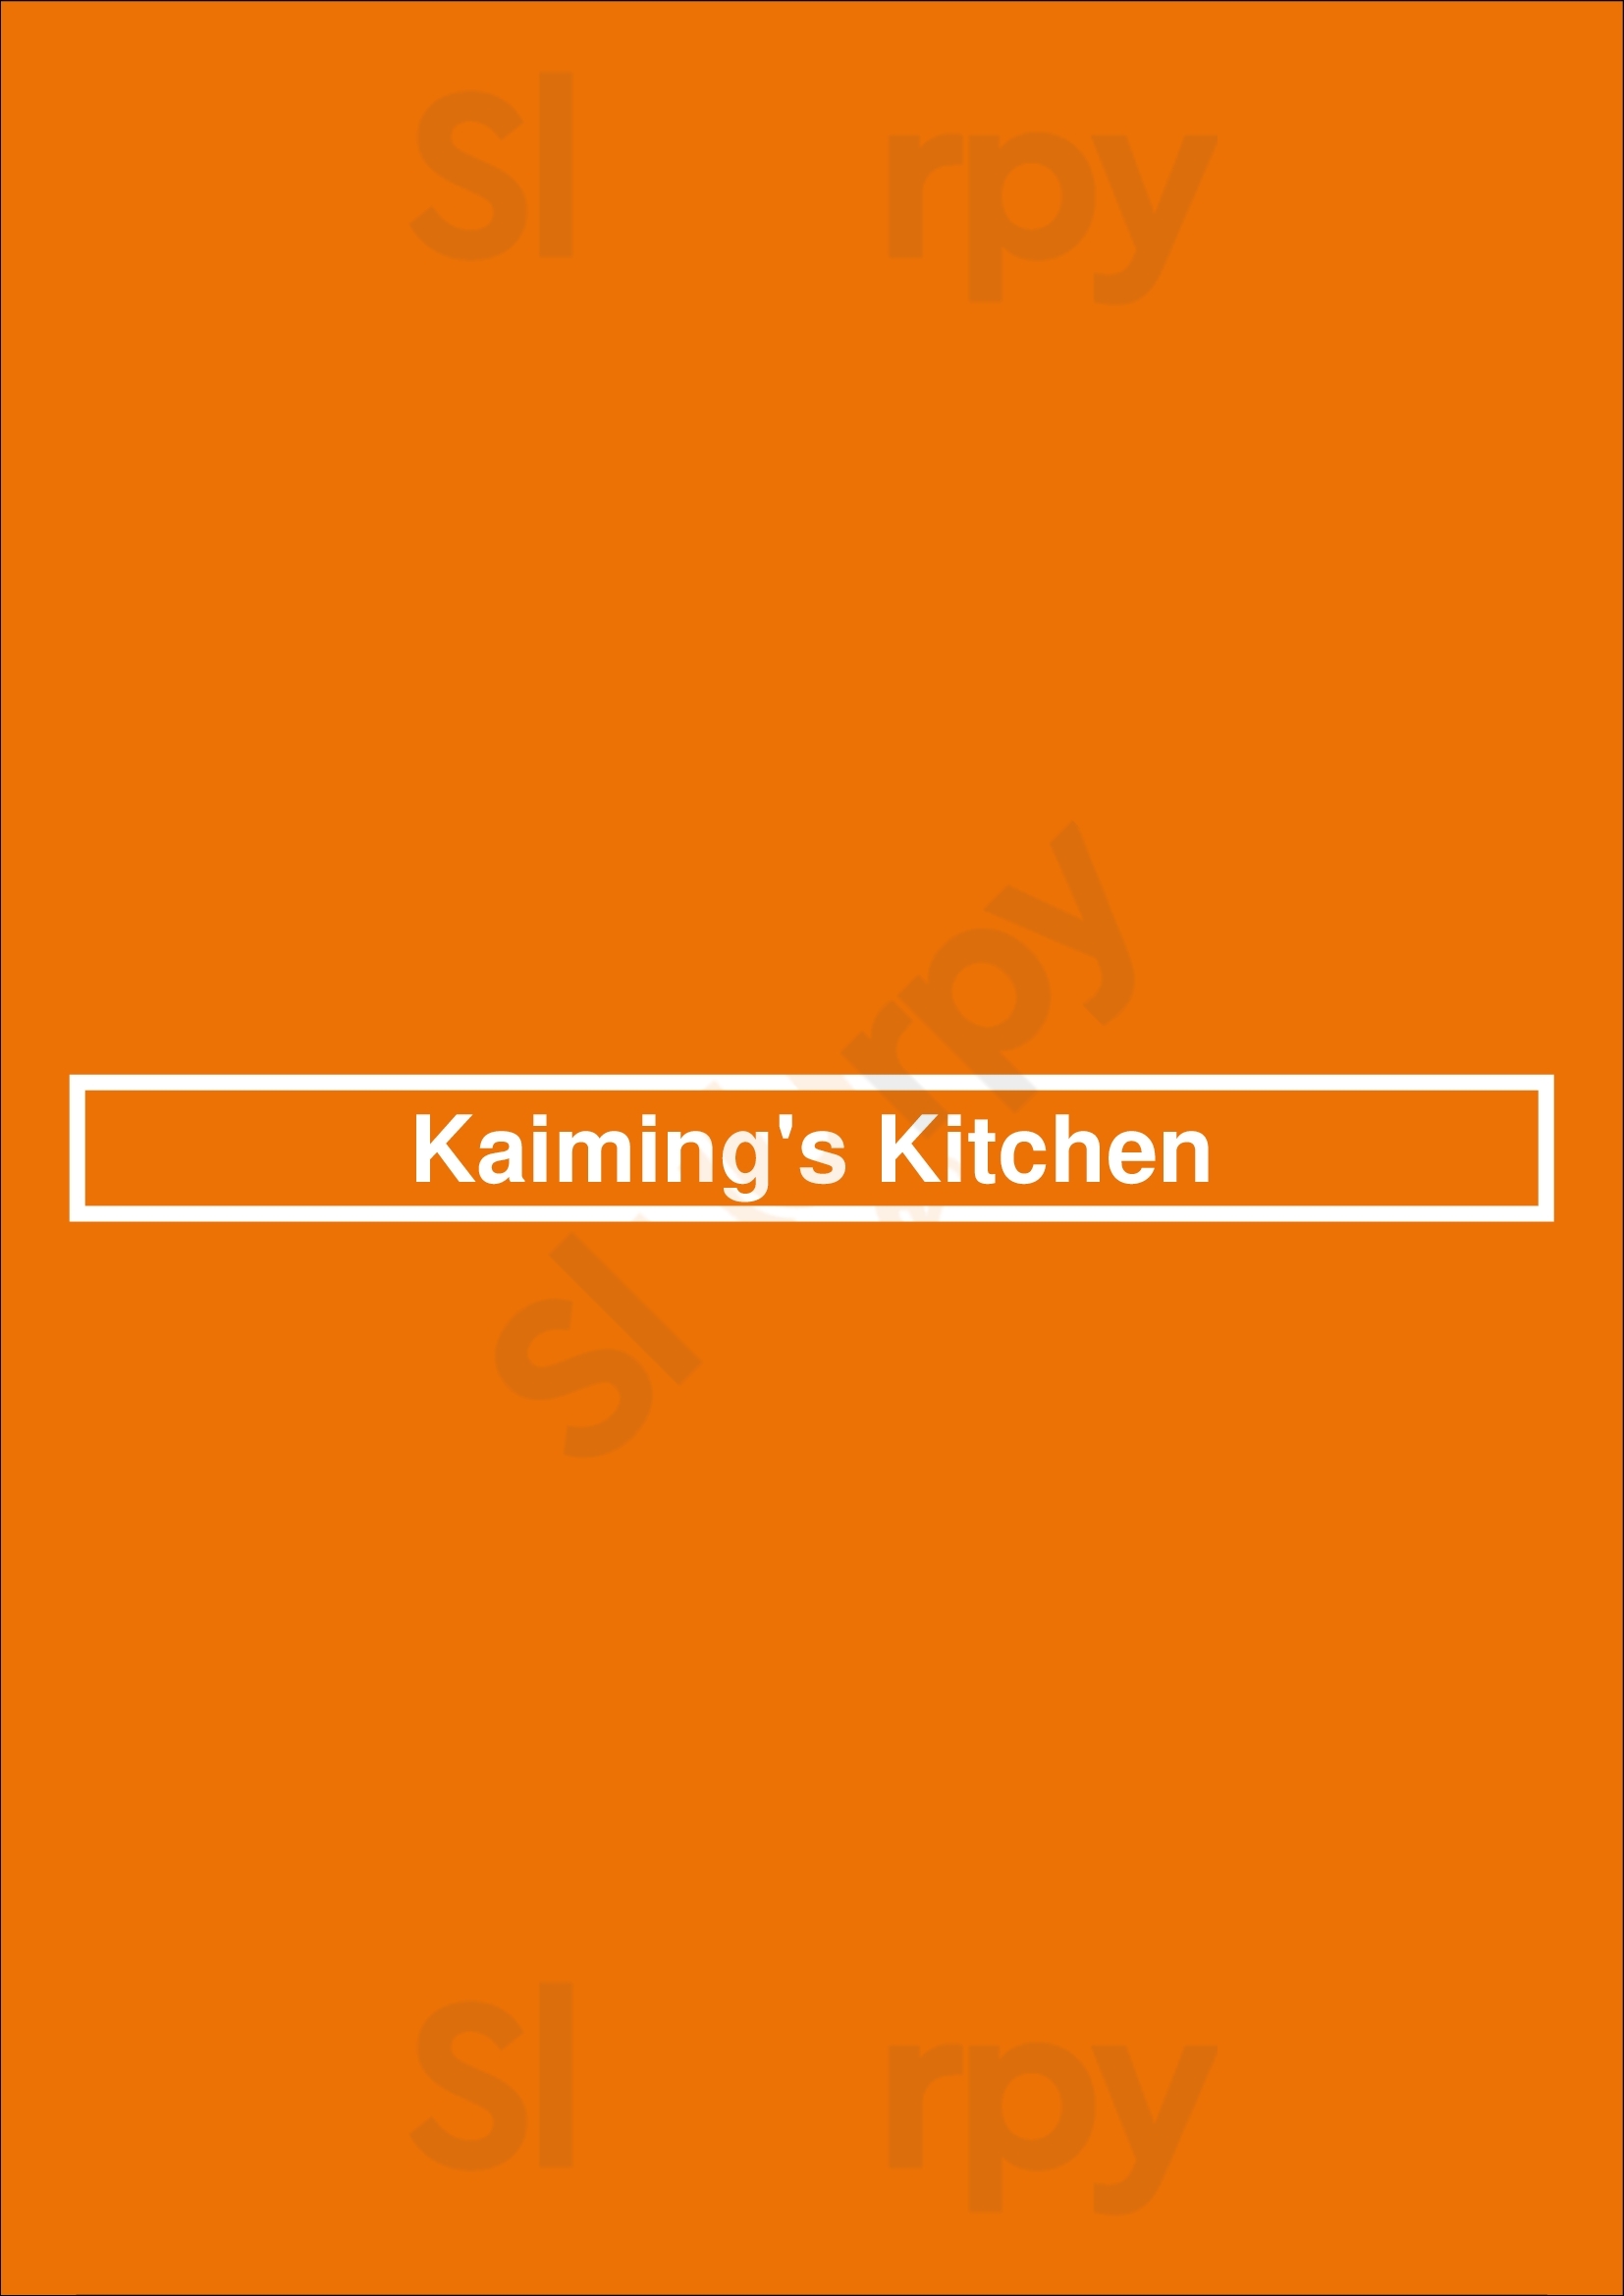 Kaiming's Kitchen Edmonton Menu - 1